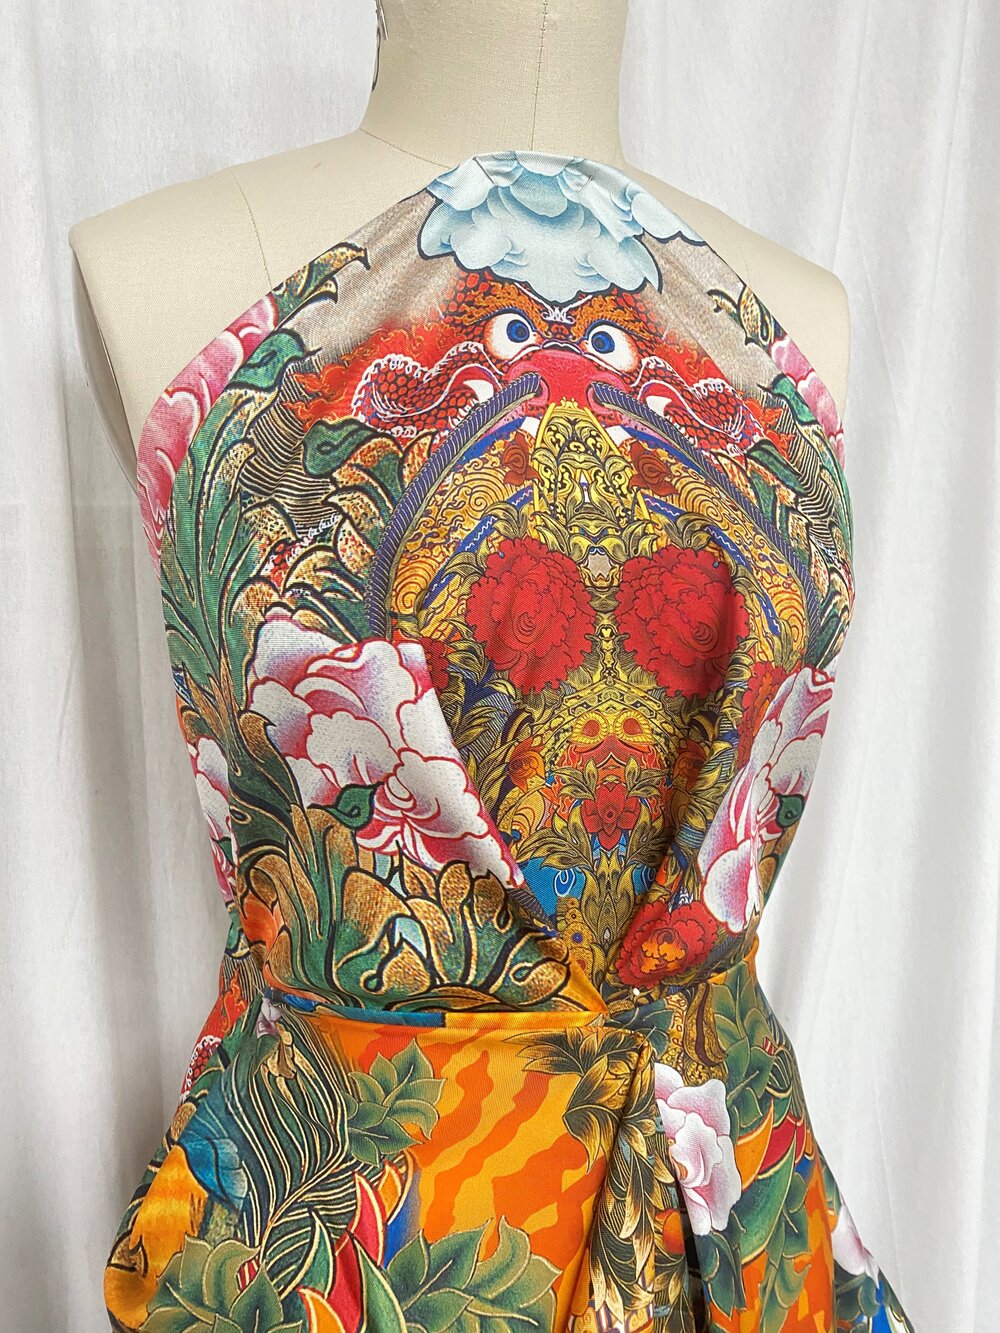 Versace Italian Printed Silk with Jacquard Border — Mendel Goldberg Fabrics  NYC